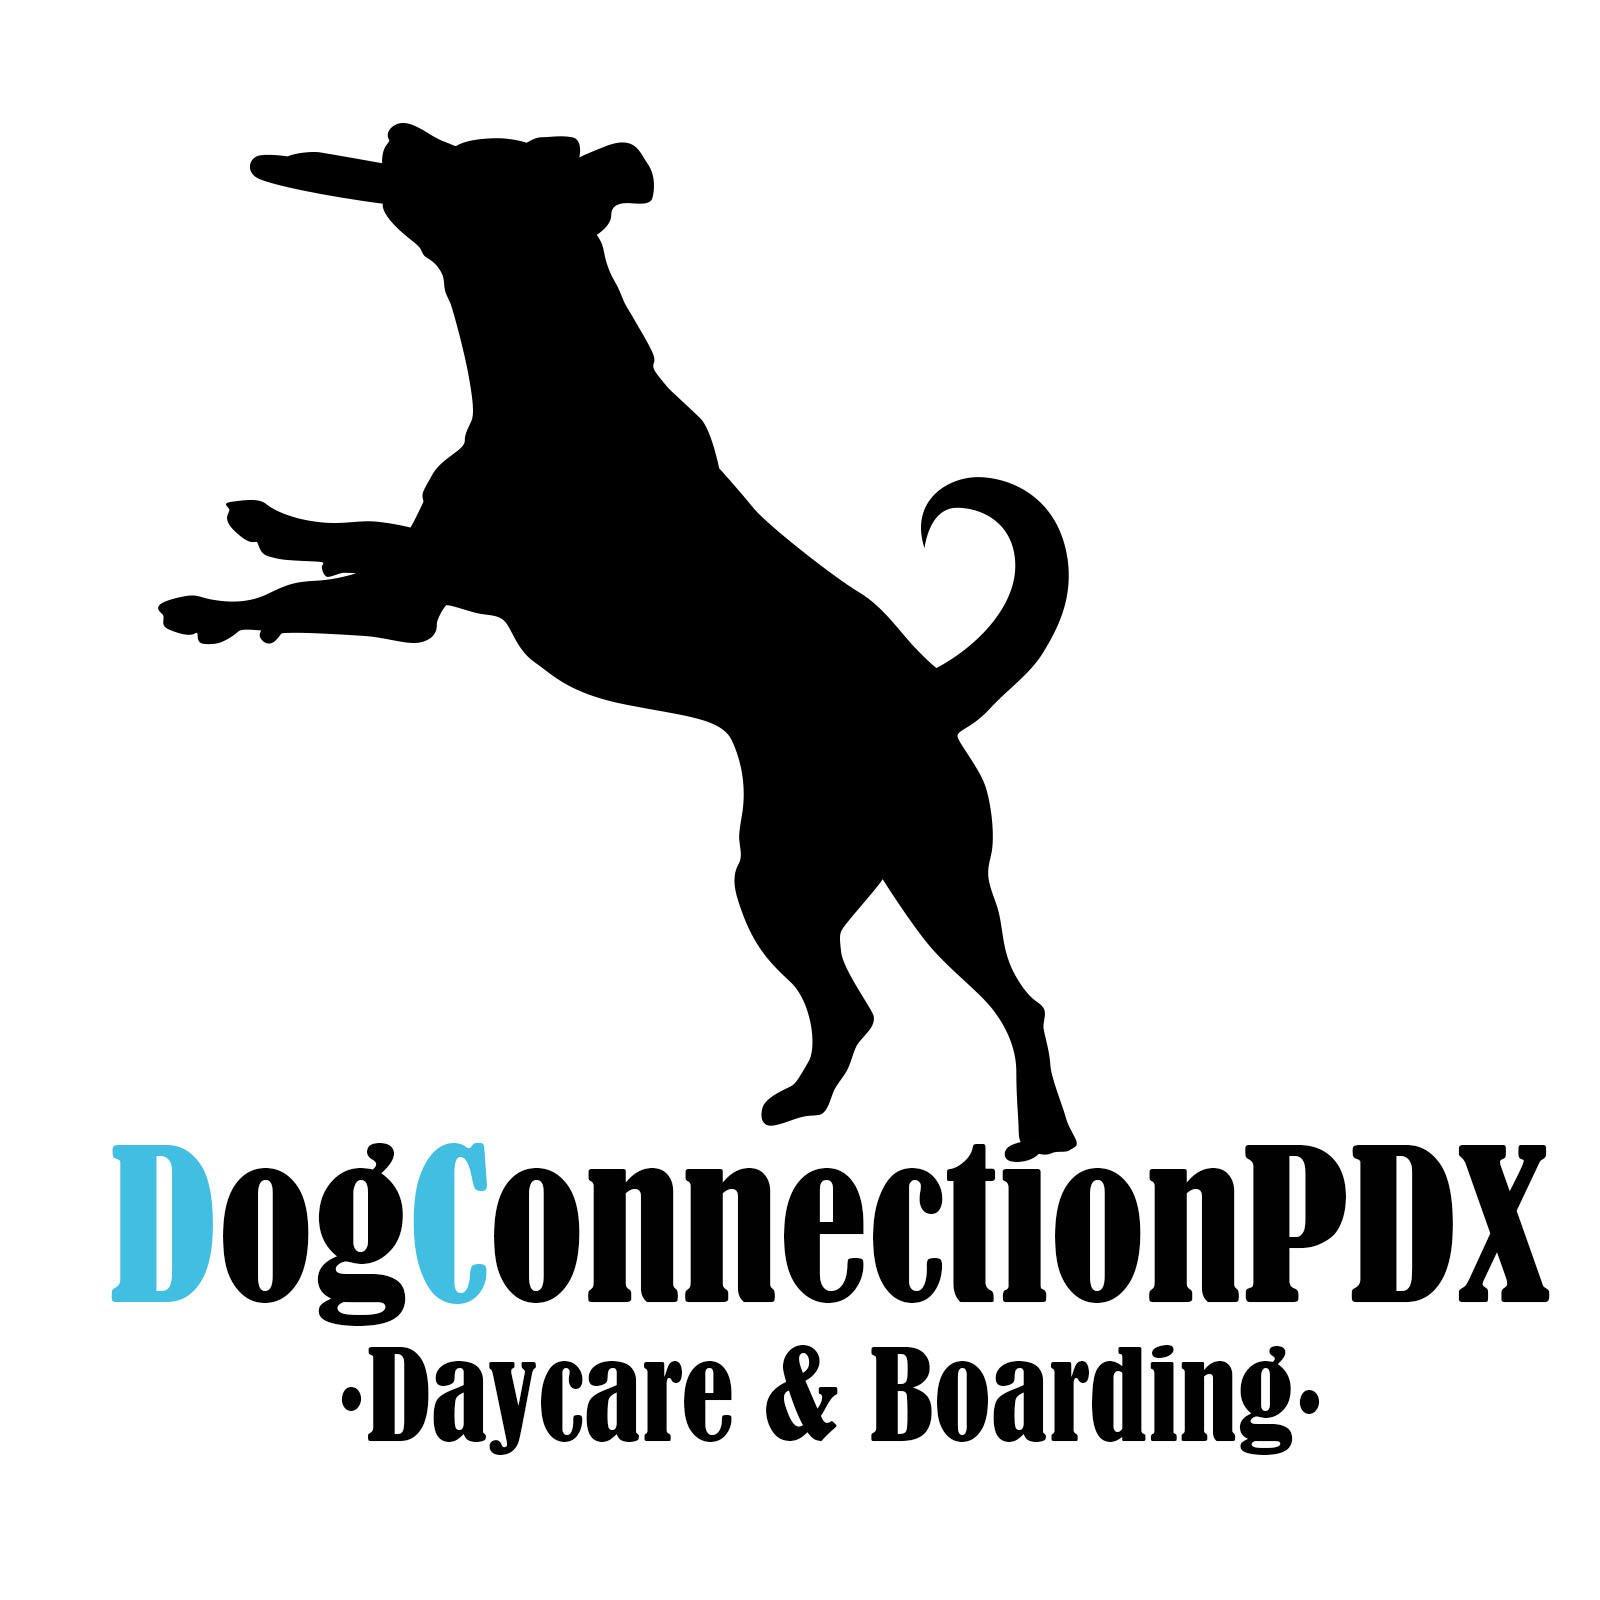 DogConnectionPDX Daycare & Boarding Photo